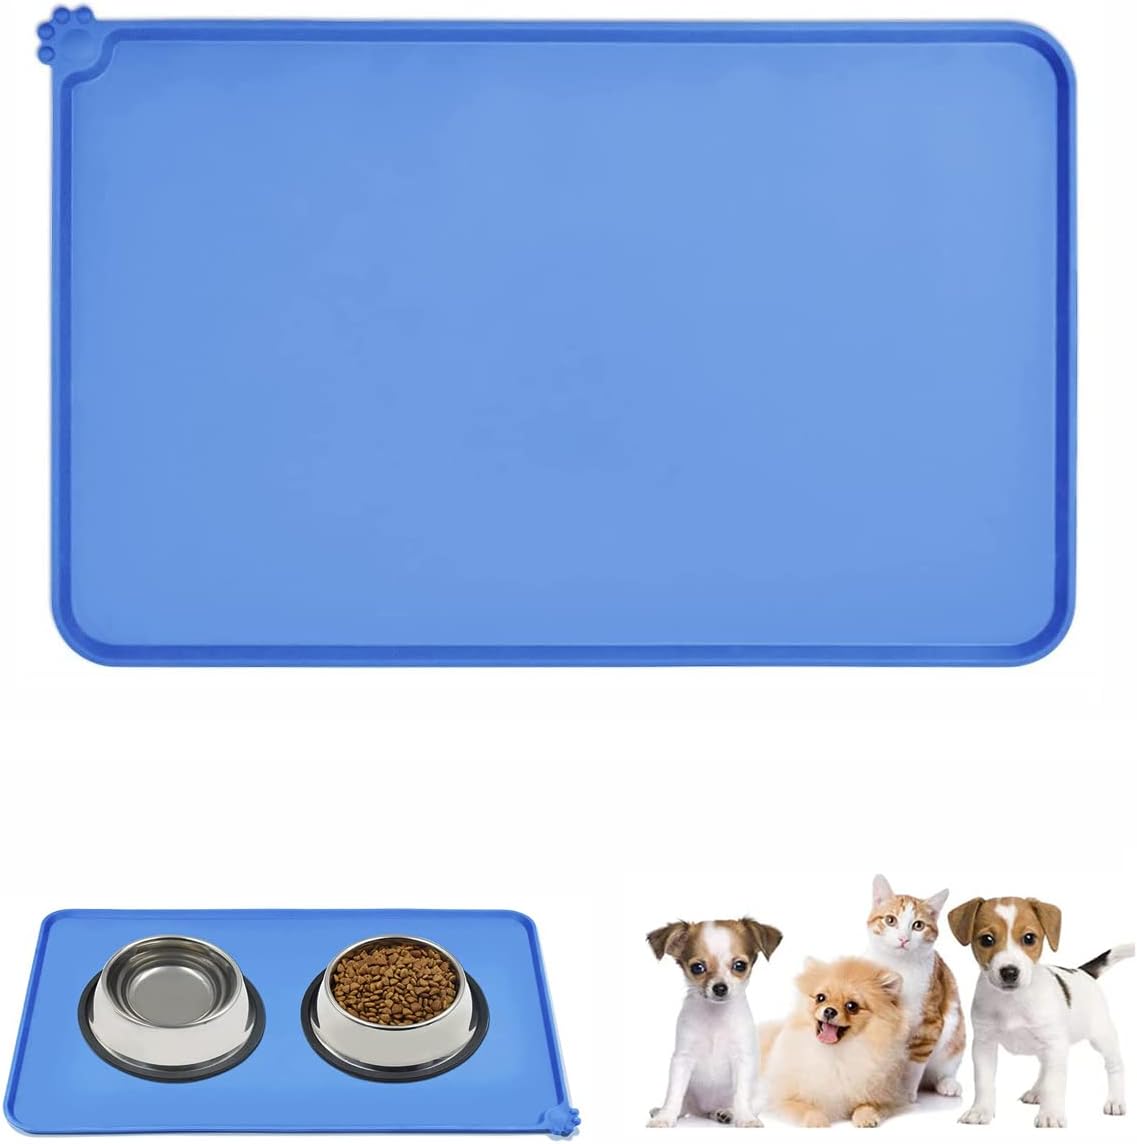 Dog Feeding Mat, Dog Placemats, Dog Rug, Pet Food Mat, Vinyl Floor